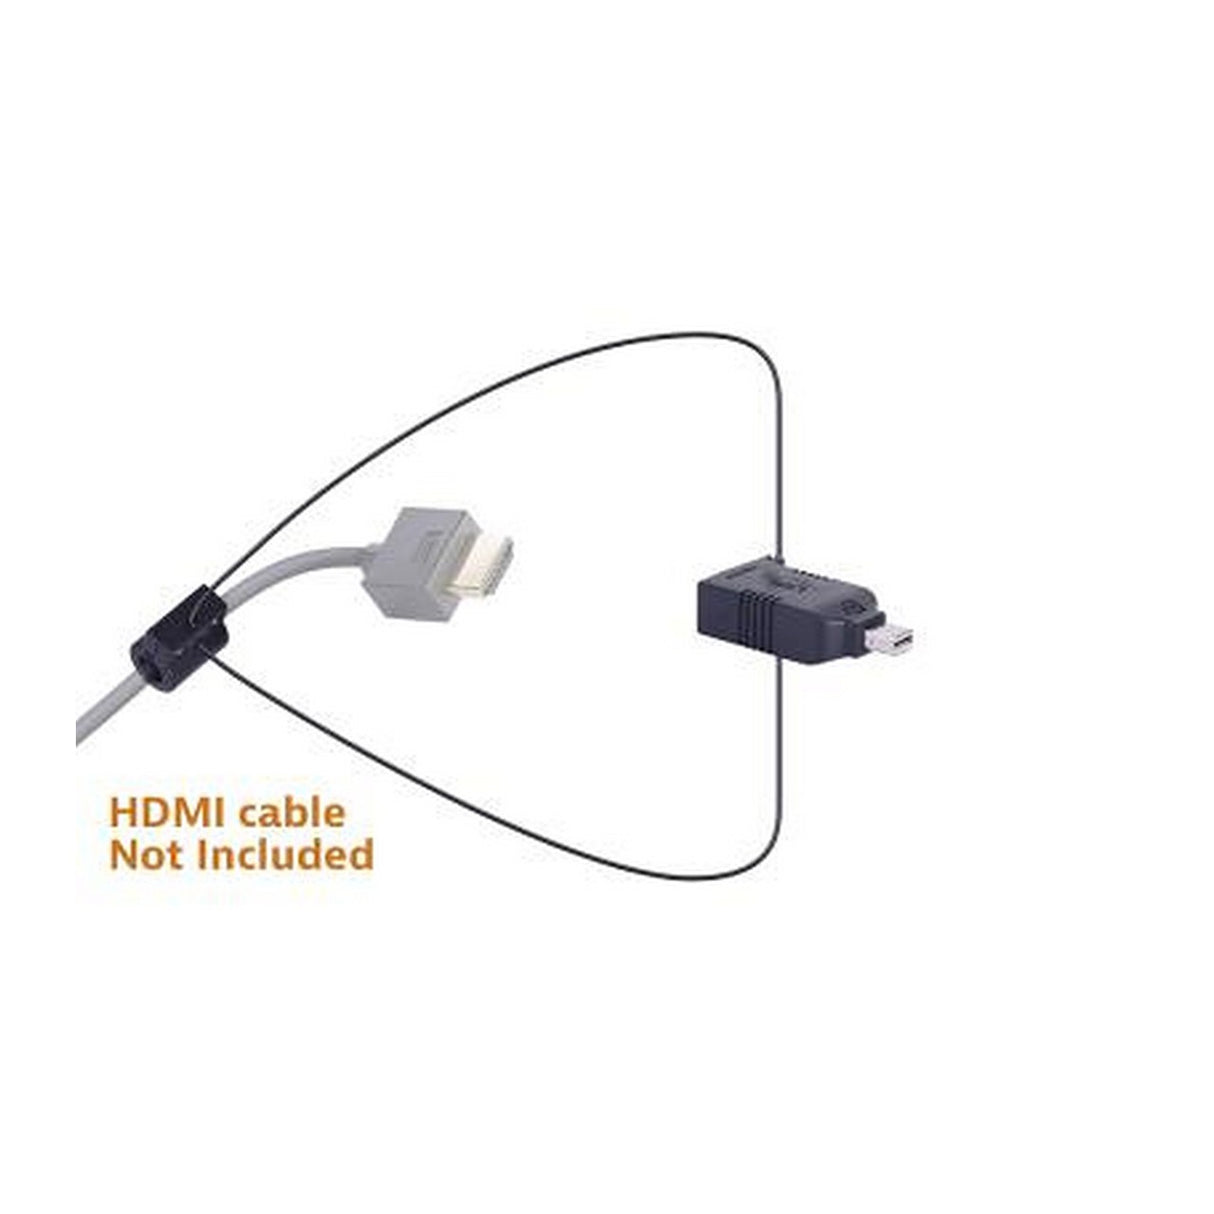 DigitaLinx DL-AR326 | Security Clamp HDMI Adapter Ring for DL-AR